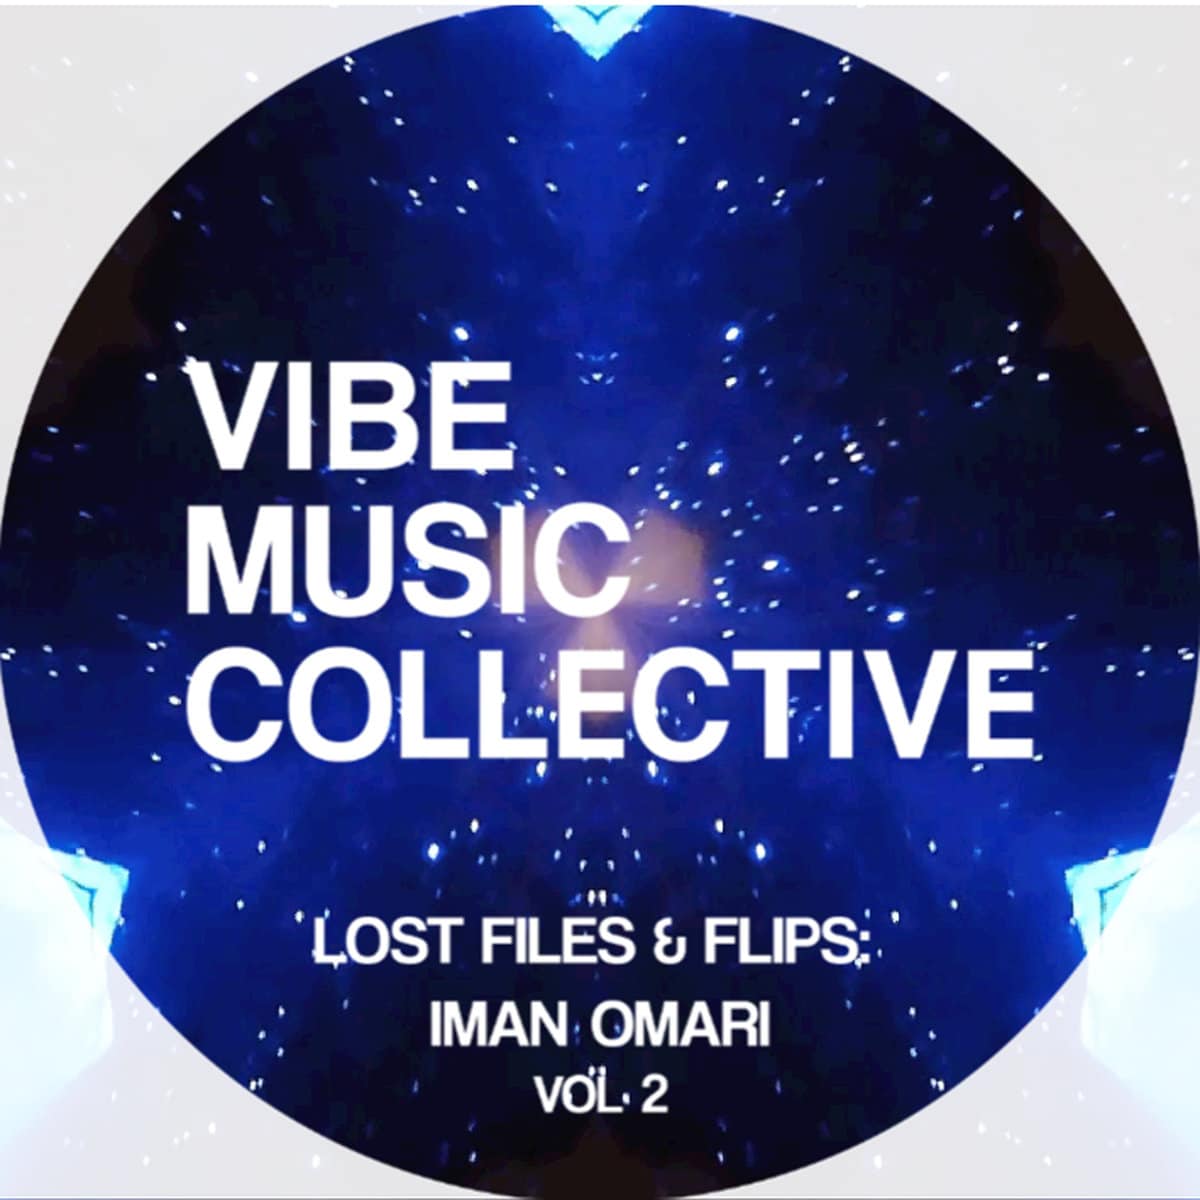 Vibe Music Collective - "Lost Files & Flips: Iman Omari Vol. 2" (Release)